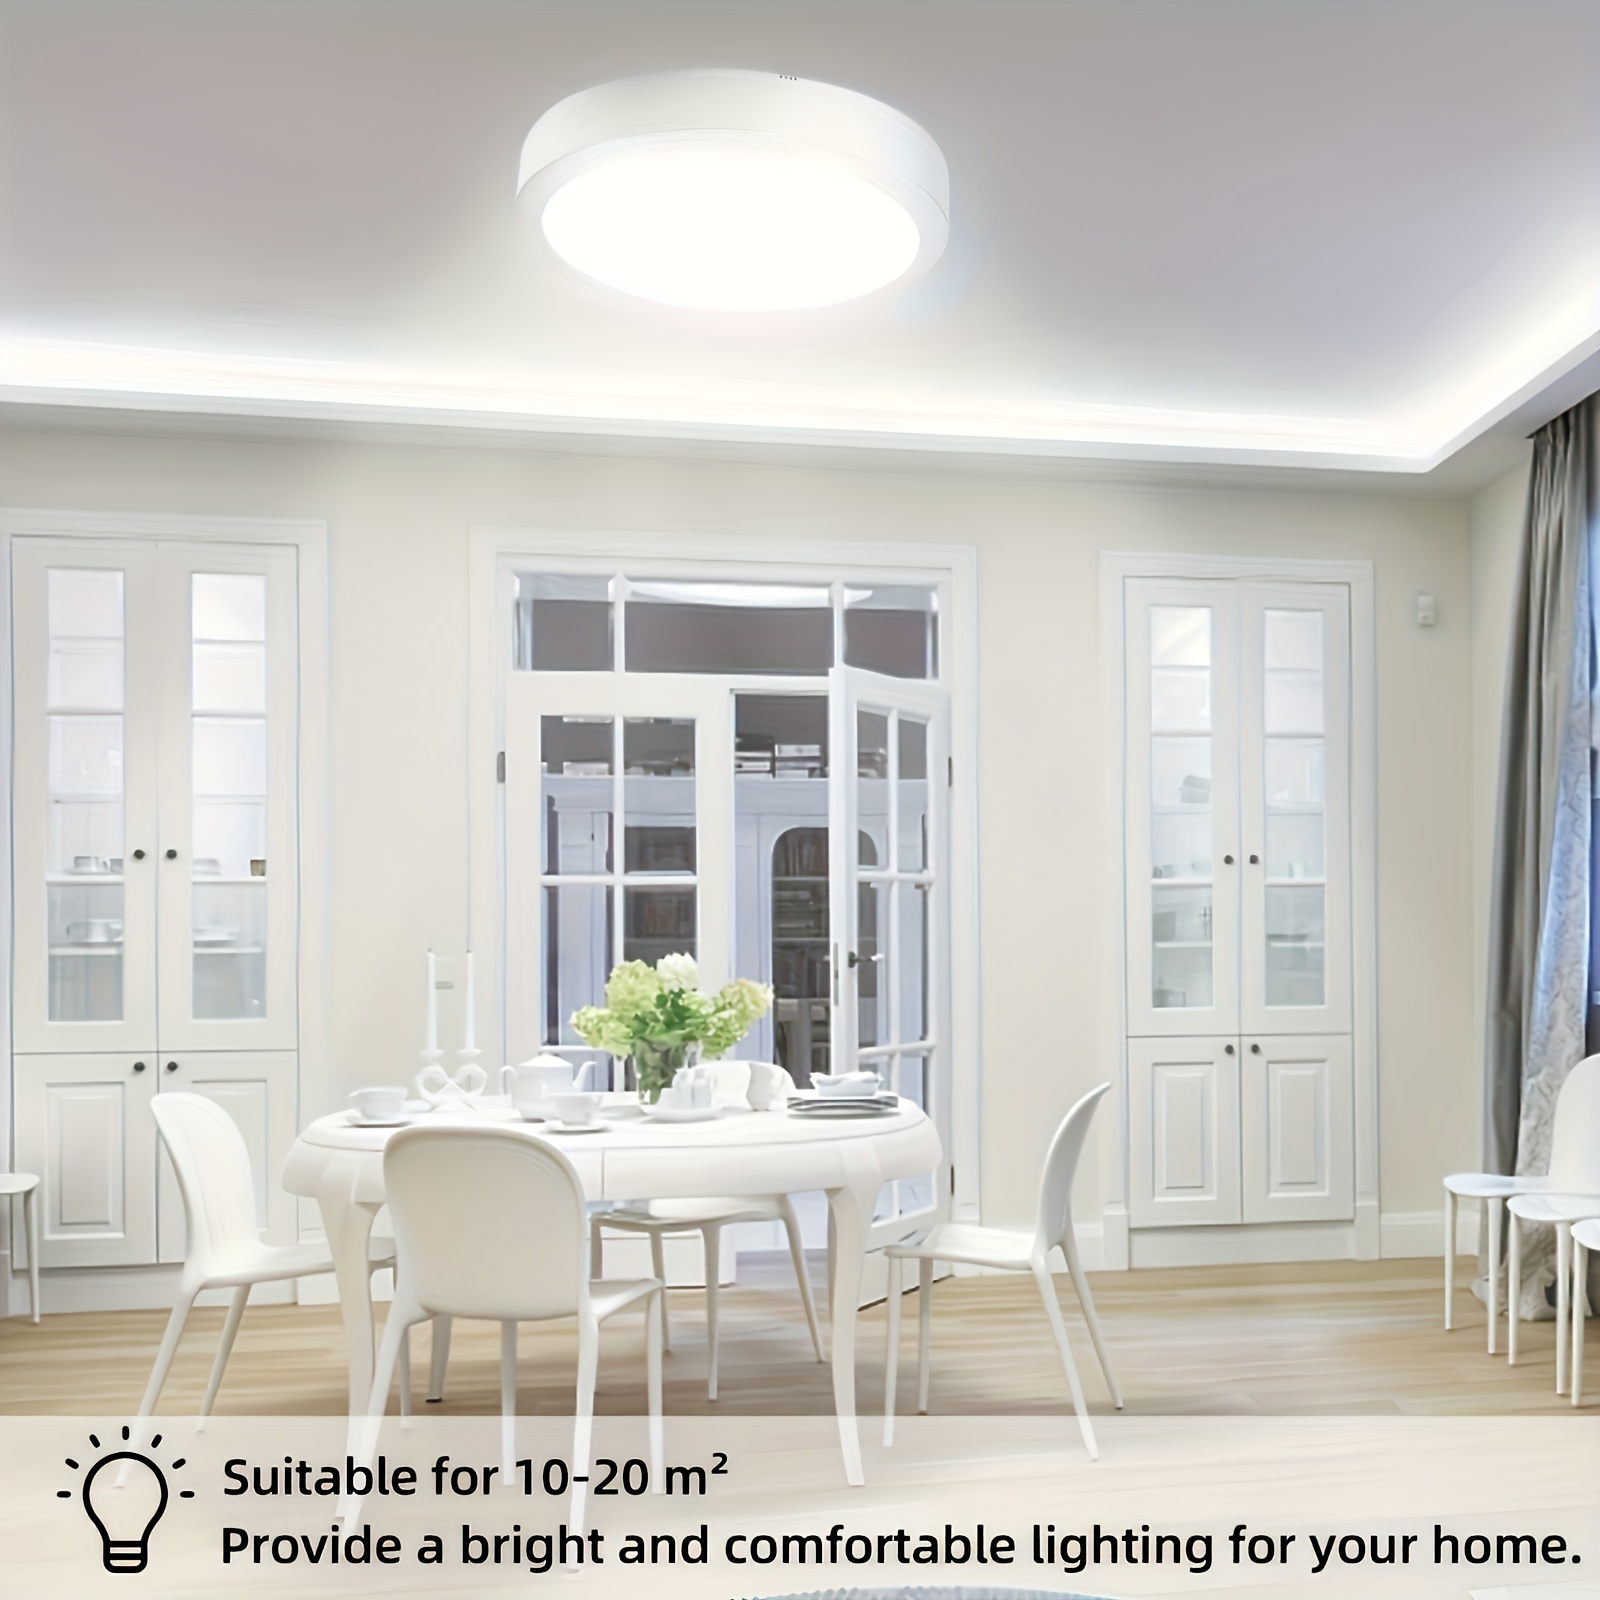 Lámparas de techo de montaje empotrado, luz LED plana de 24 W para techo,  6000 K 2200 lúmenes, lámpara blanca redonda ultra fina para dormitorio